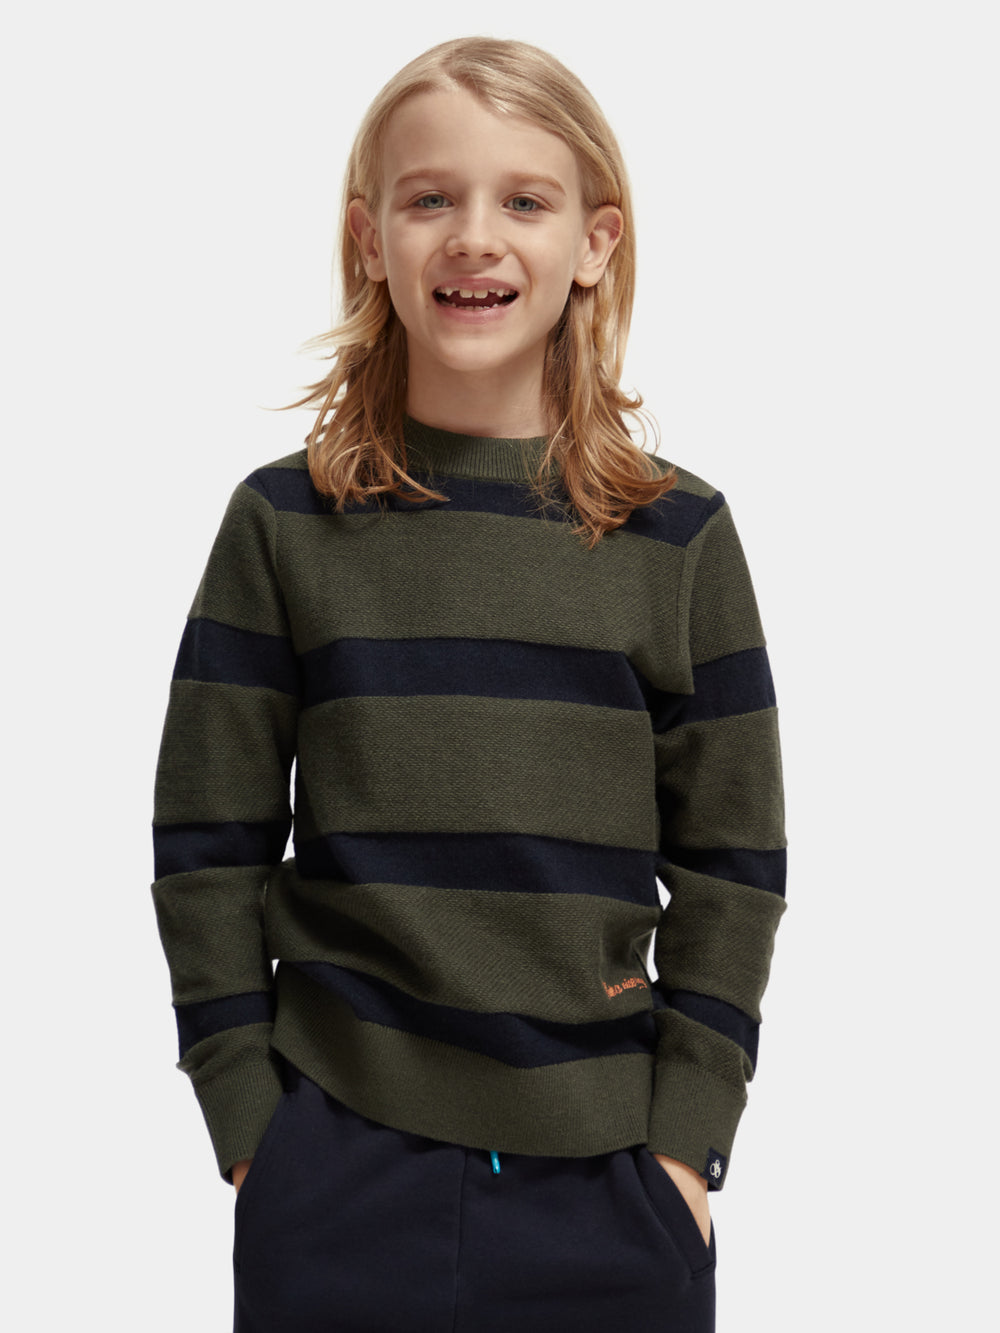 Kids - Striped wool-blended sweater - Scotch & Soda AU